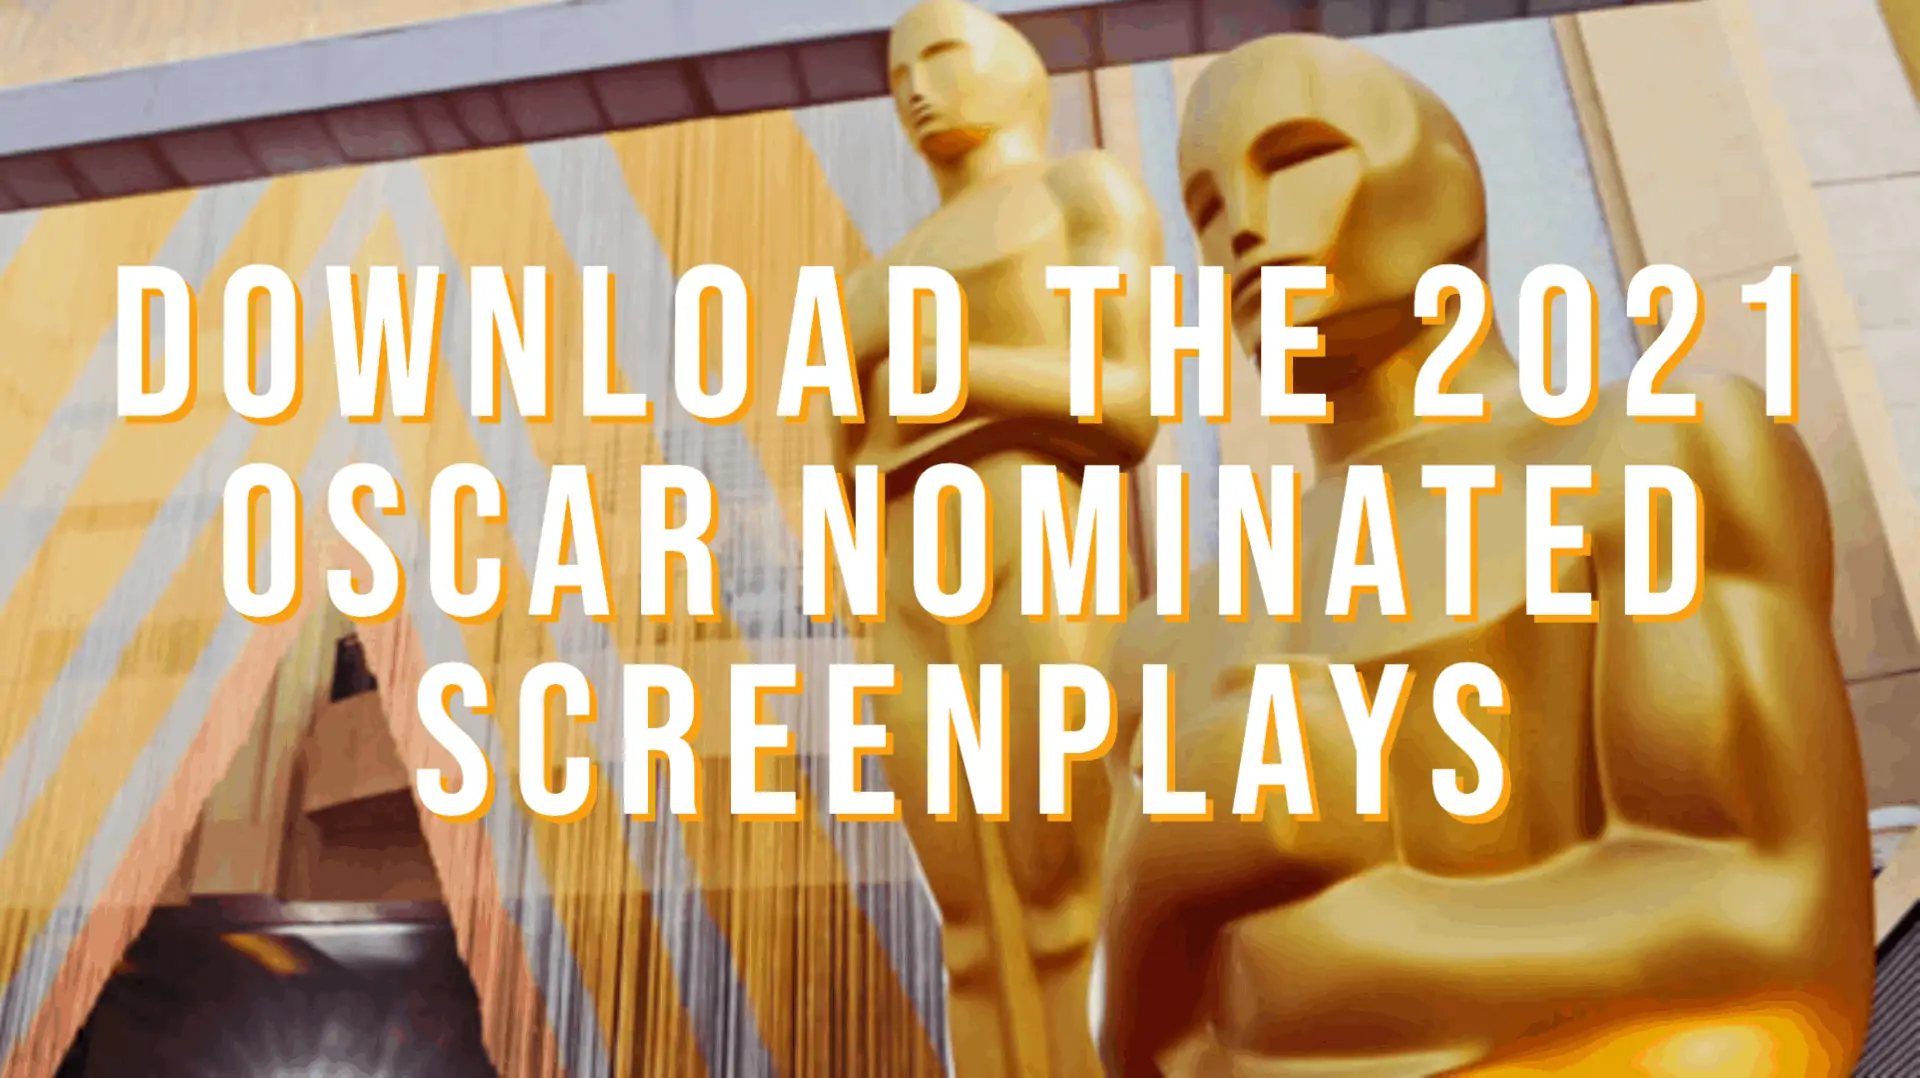 Download-Oscar-Nominated-Screenplays-2021-Scriptation